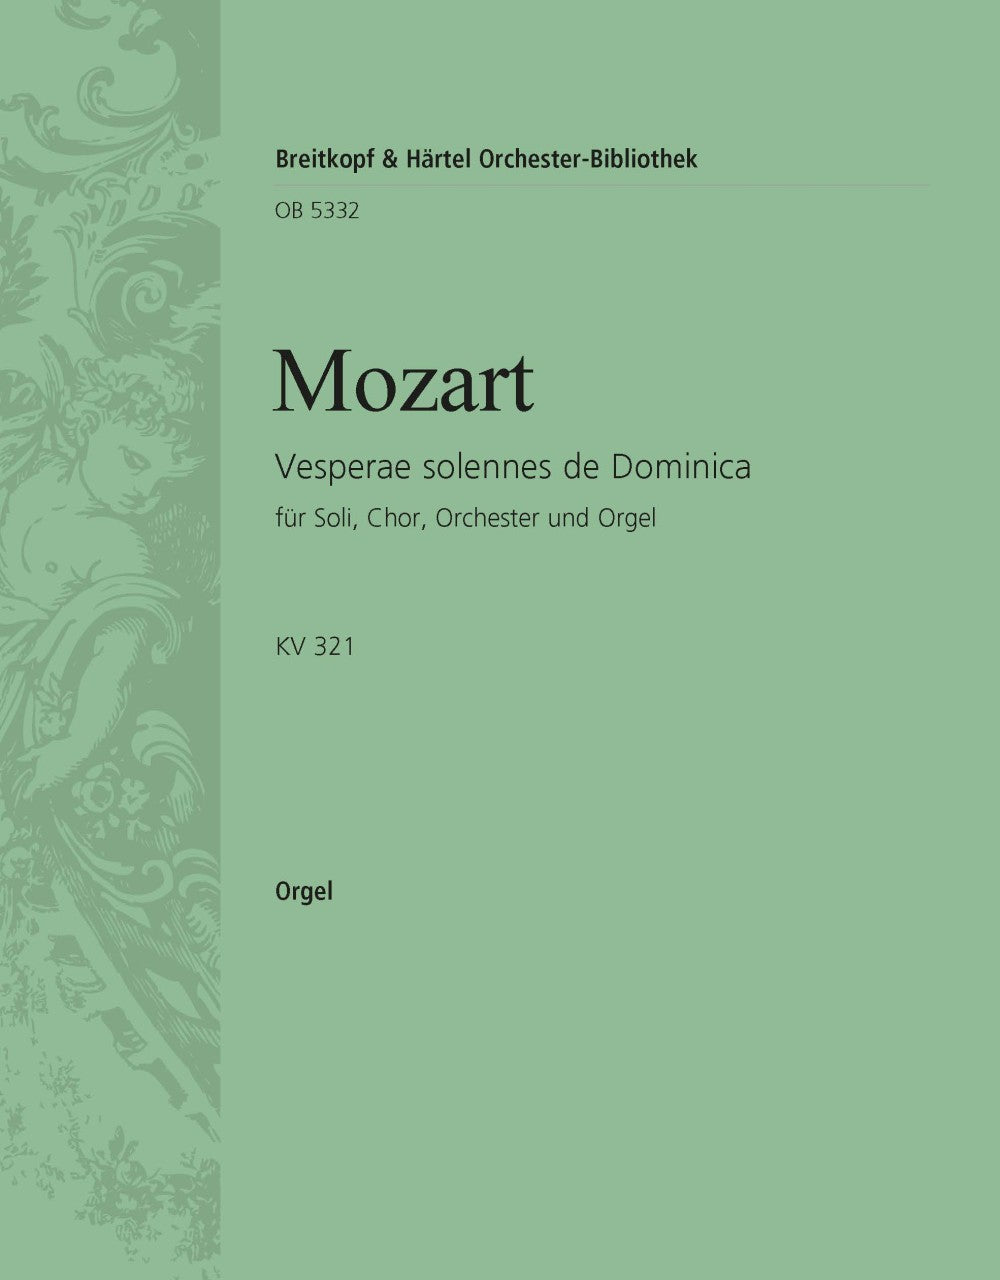 Mozart: Vesperae solennes de Dominica K. 321